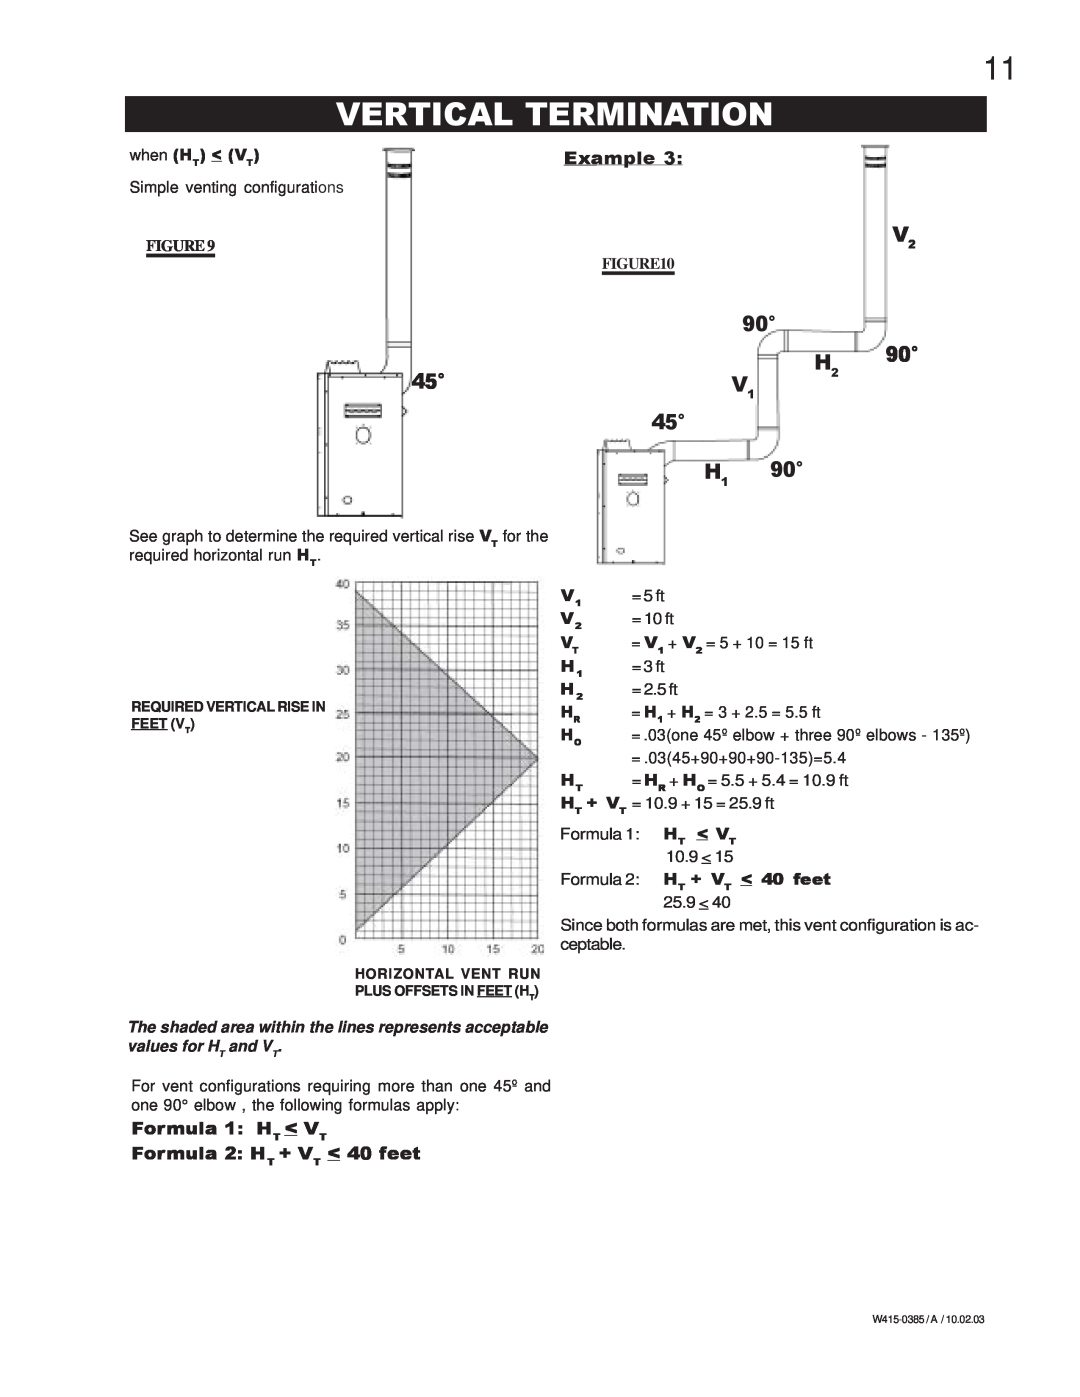 Continental BCDV42N, BCDV42P manual Vertical Termination, Example, Formula 1 HT VT Formula 2 HT + VT 40 feet 